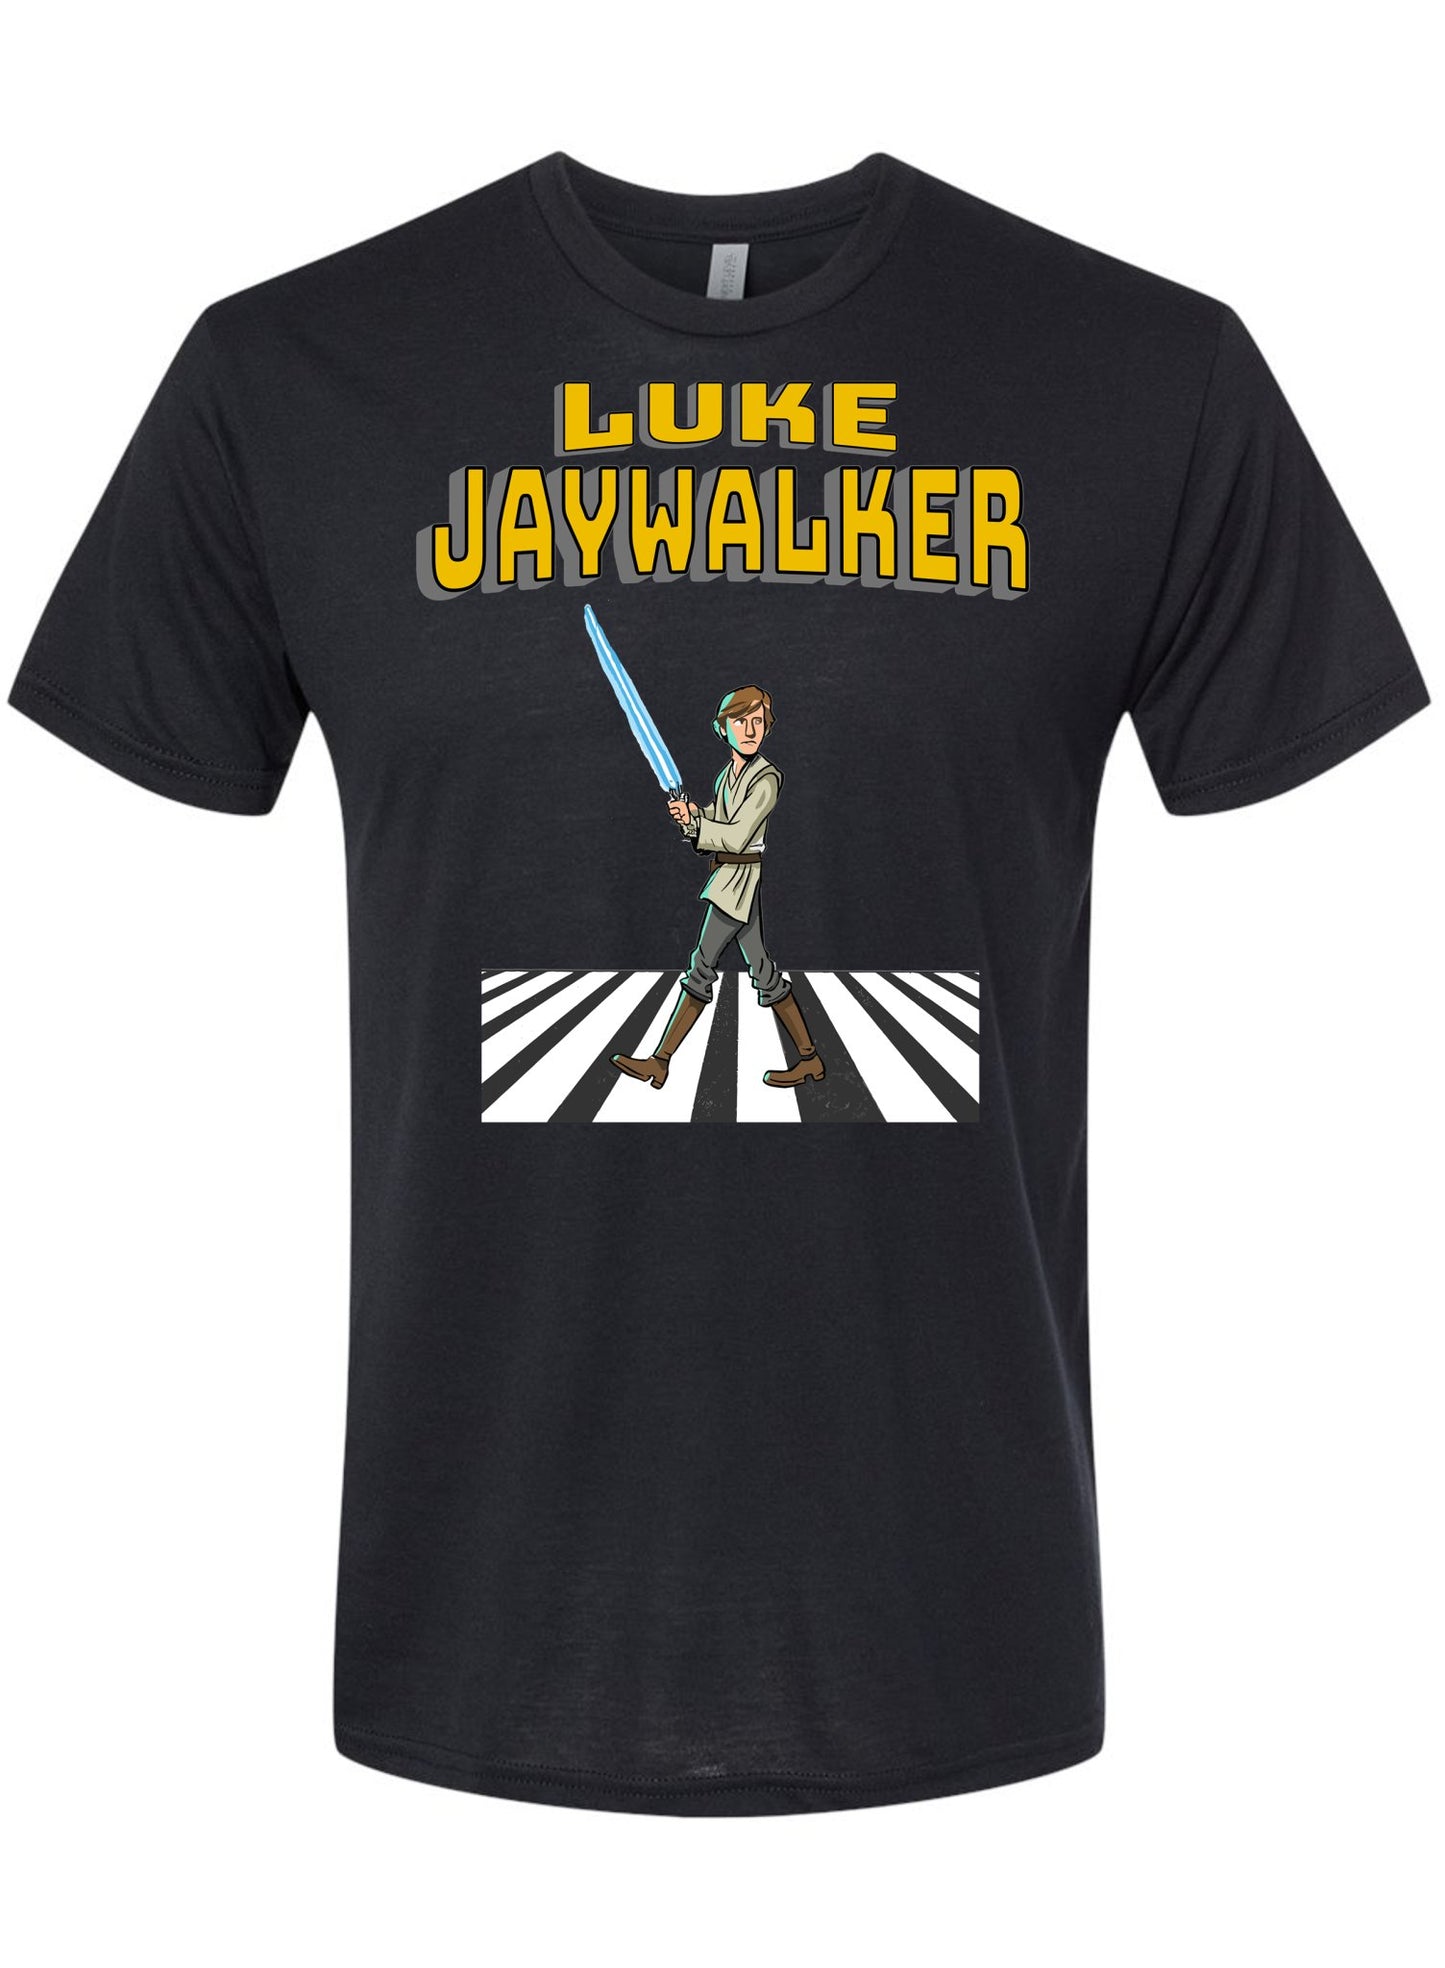 Vintage Black Luke Jaywalker T-Shirt – Retro Nostalgia! -